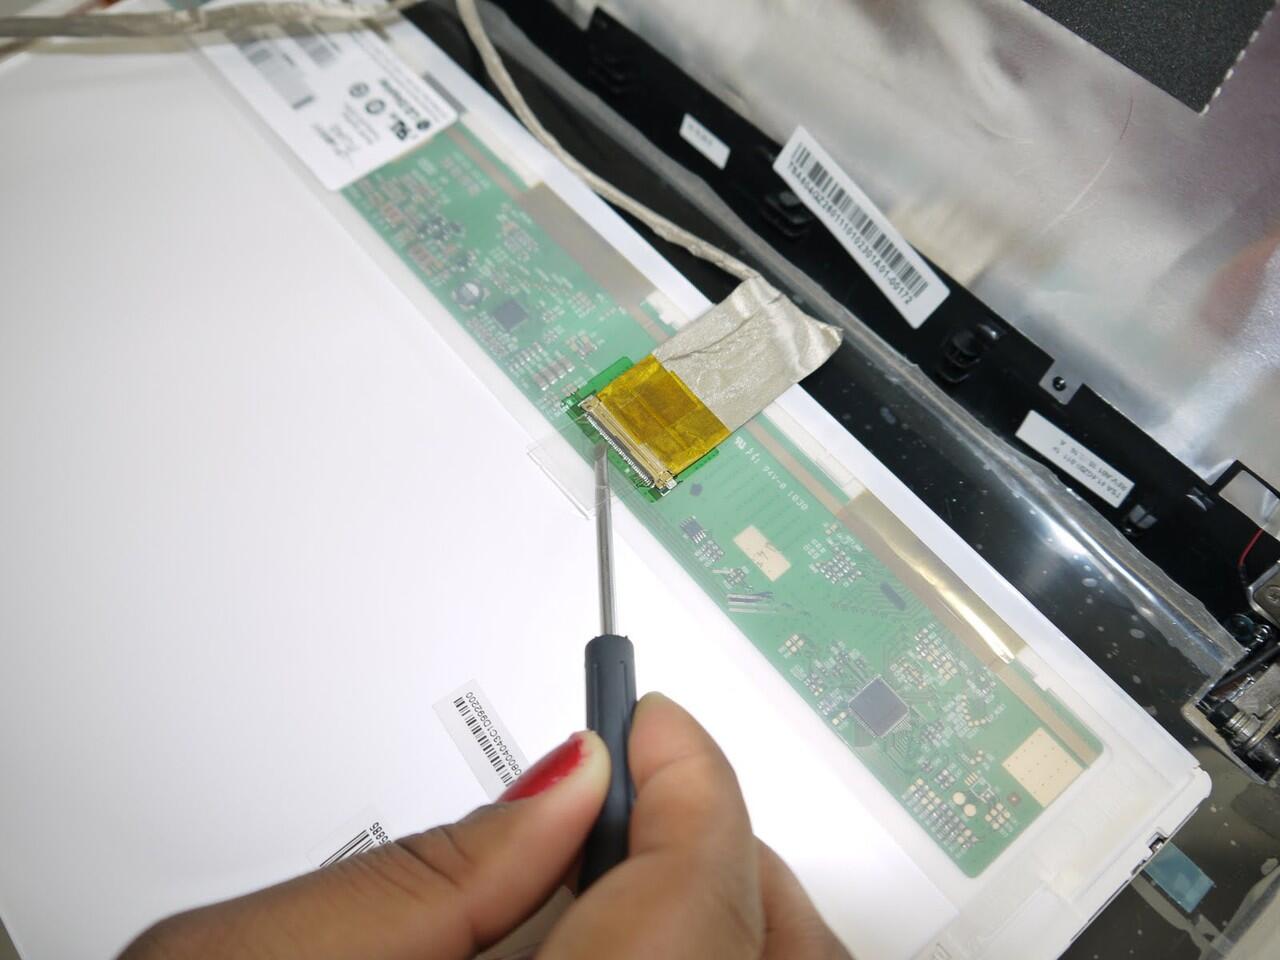 &#91;TUTORIAL&#93; Cara Membongkar LCD LED Laptop Sendiri Sangat Mudah